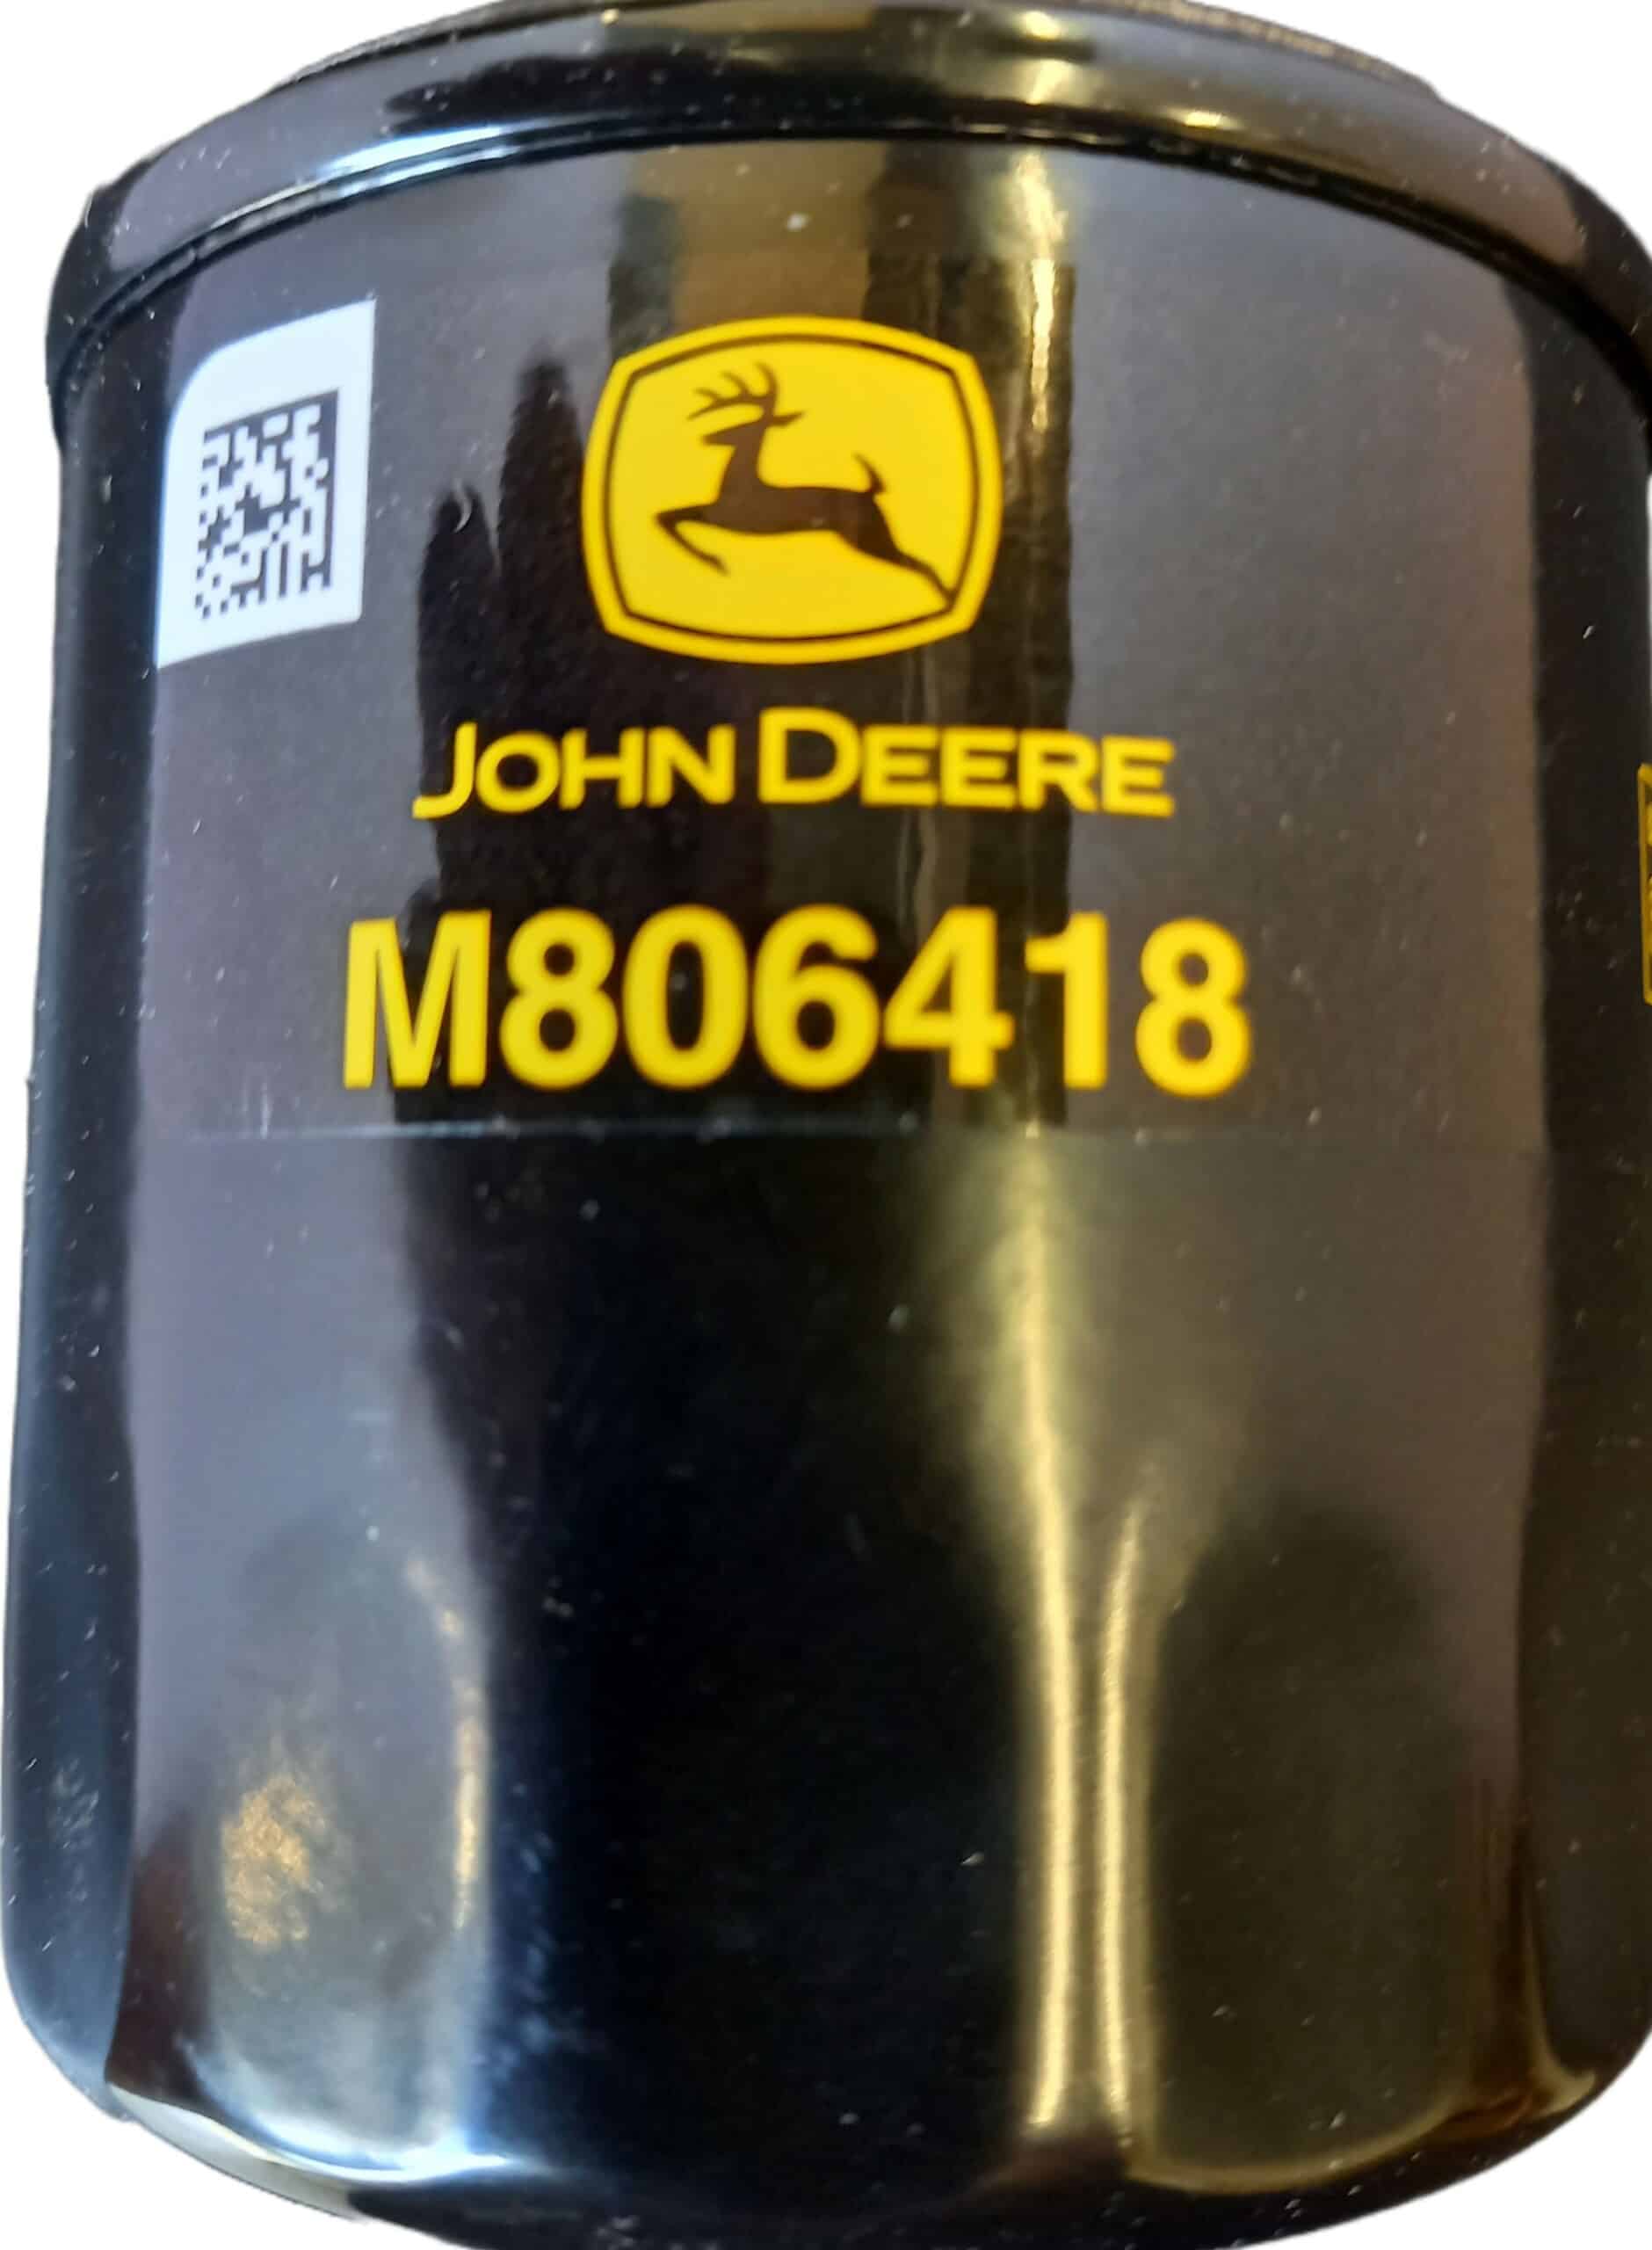 LG243 John Deere John Deere Home Maintenance Kit AUC17087 